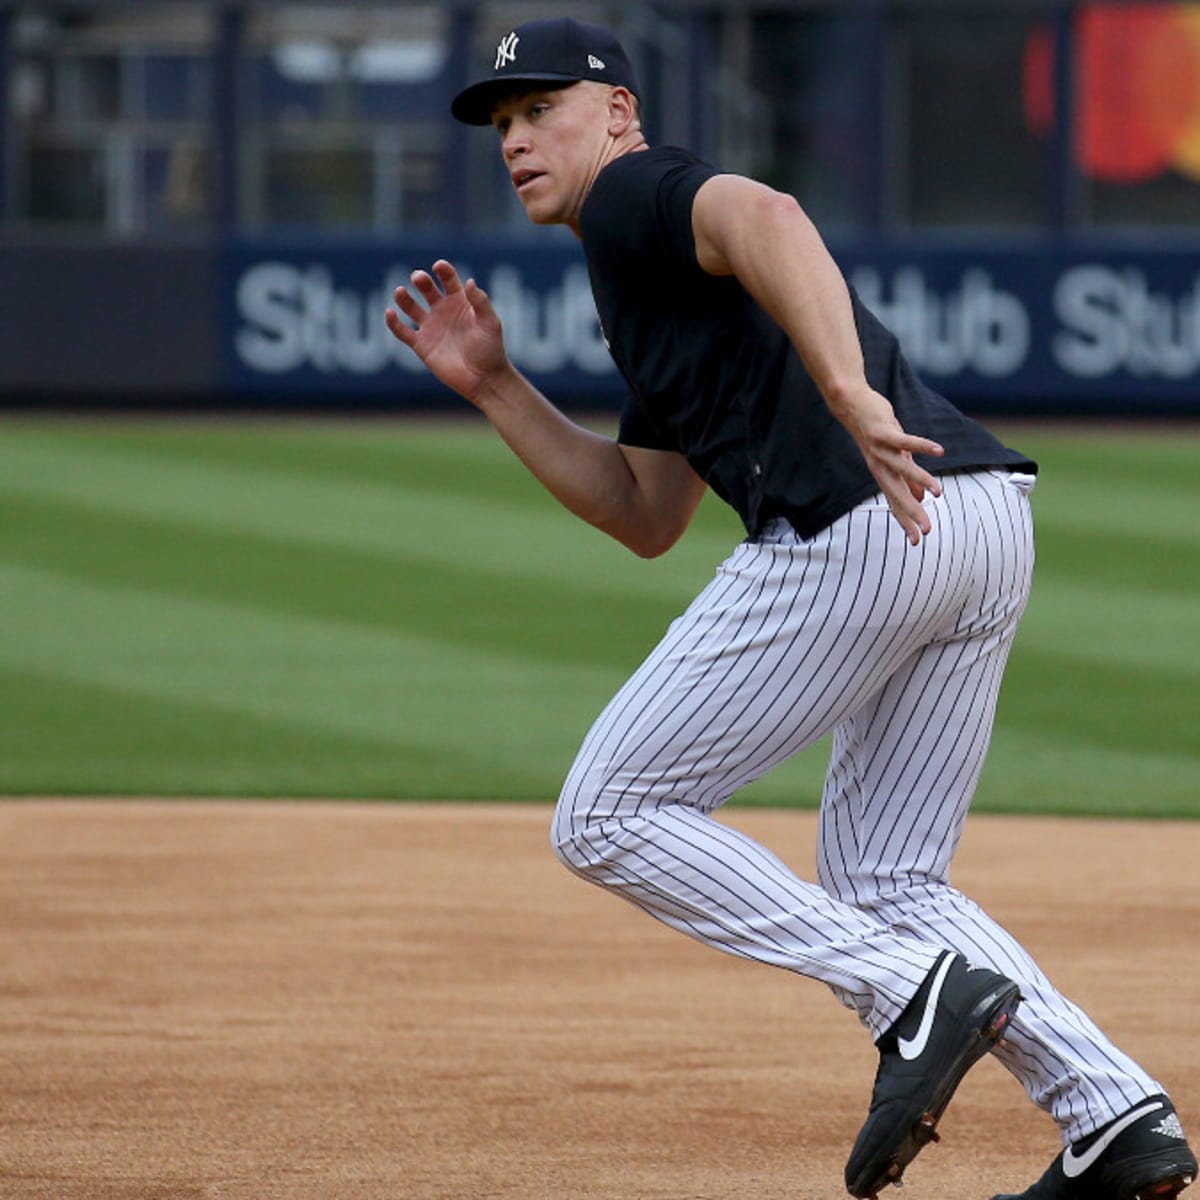 Adidas Signs New York Yankees Star Aaron Judge